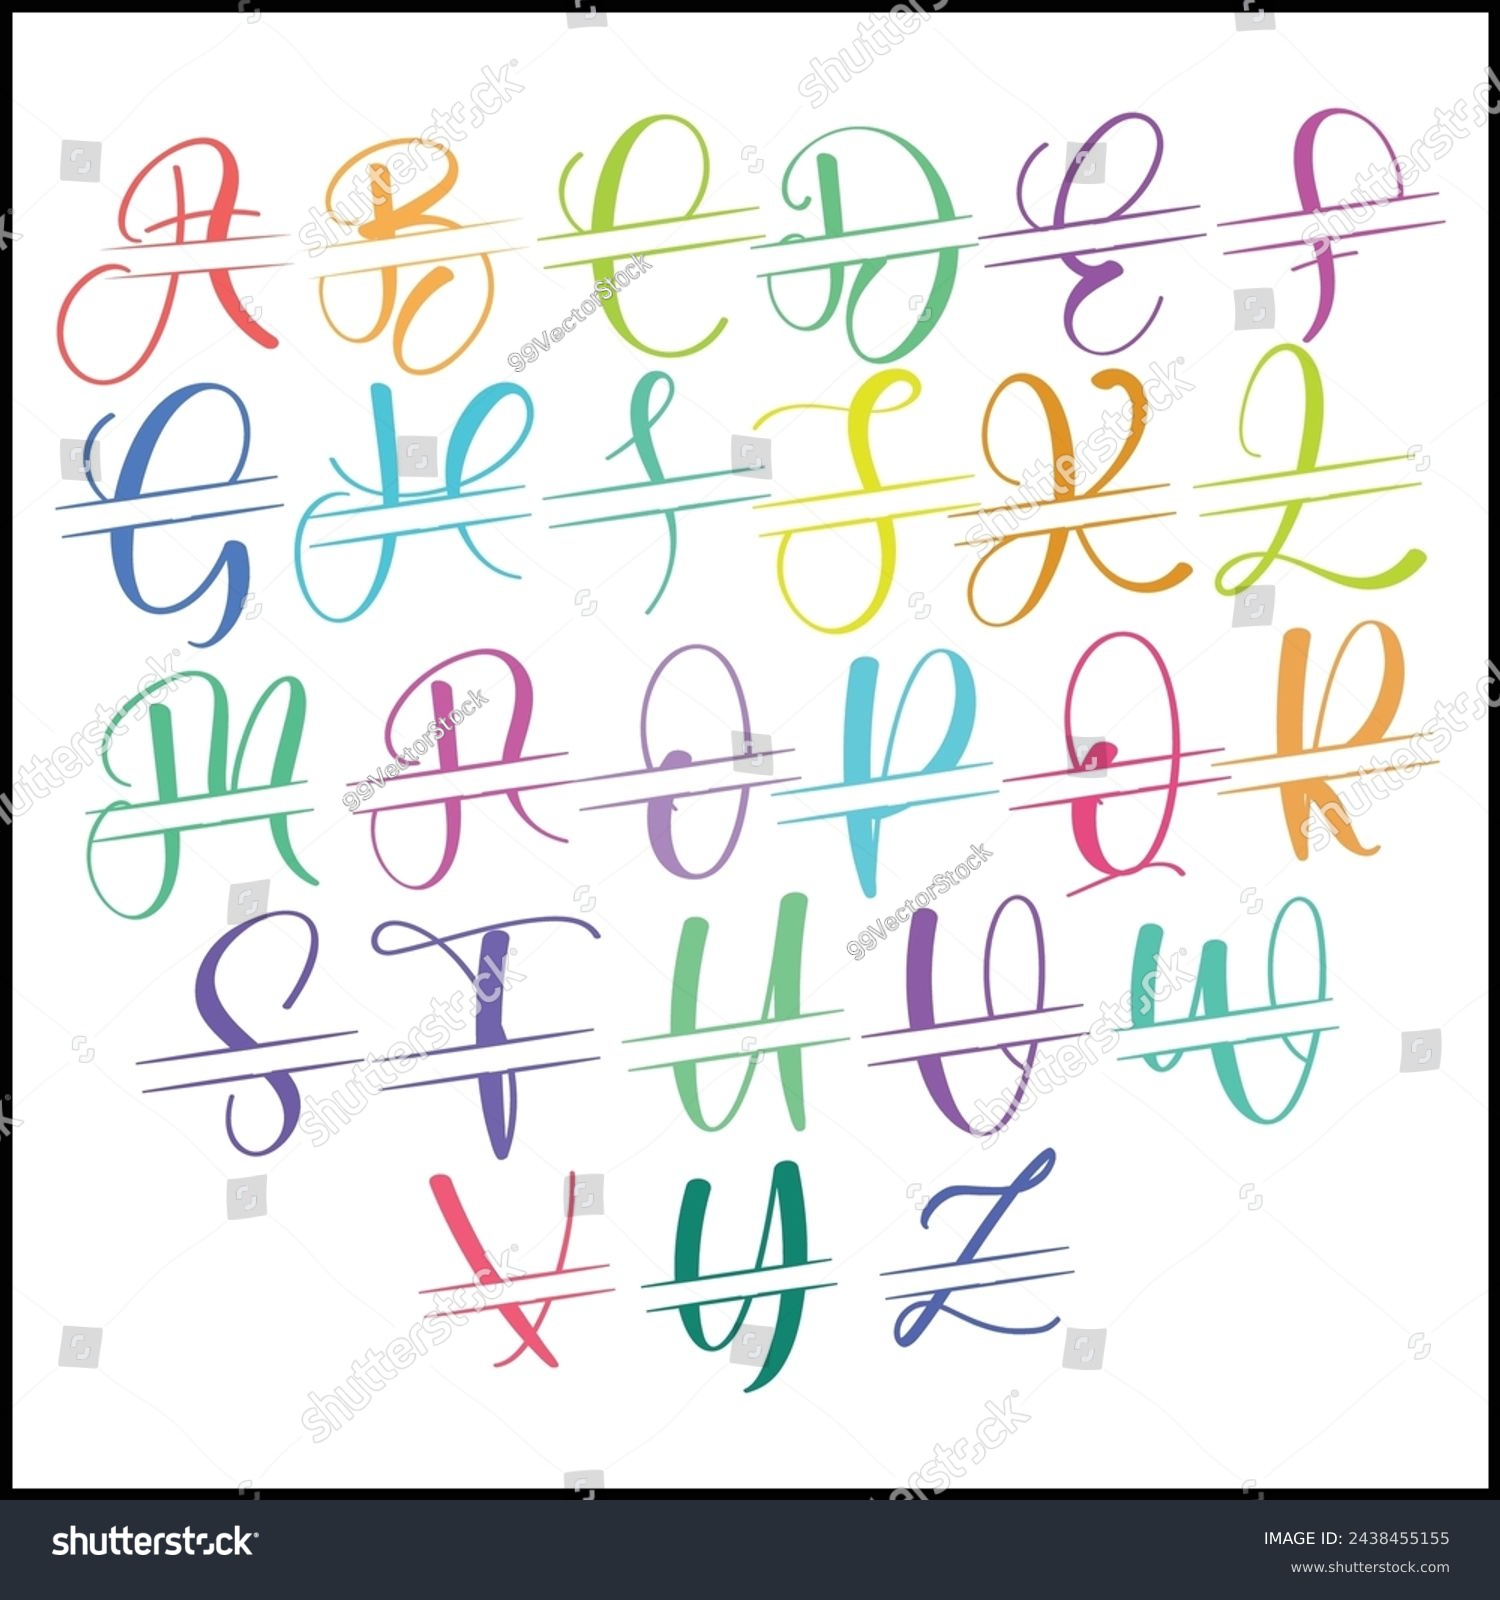 SVG of A to Z Colorful Vector Alphabet Designs | Print Design svg